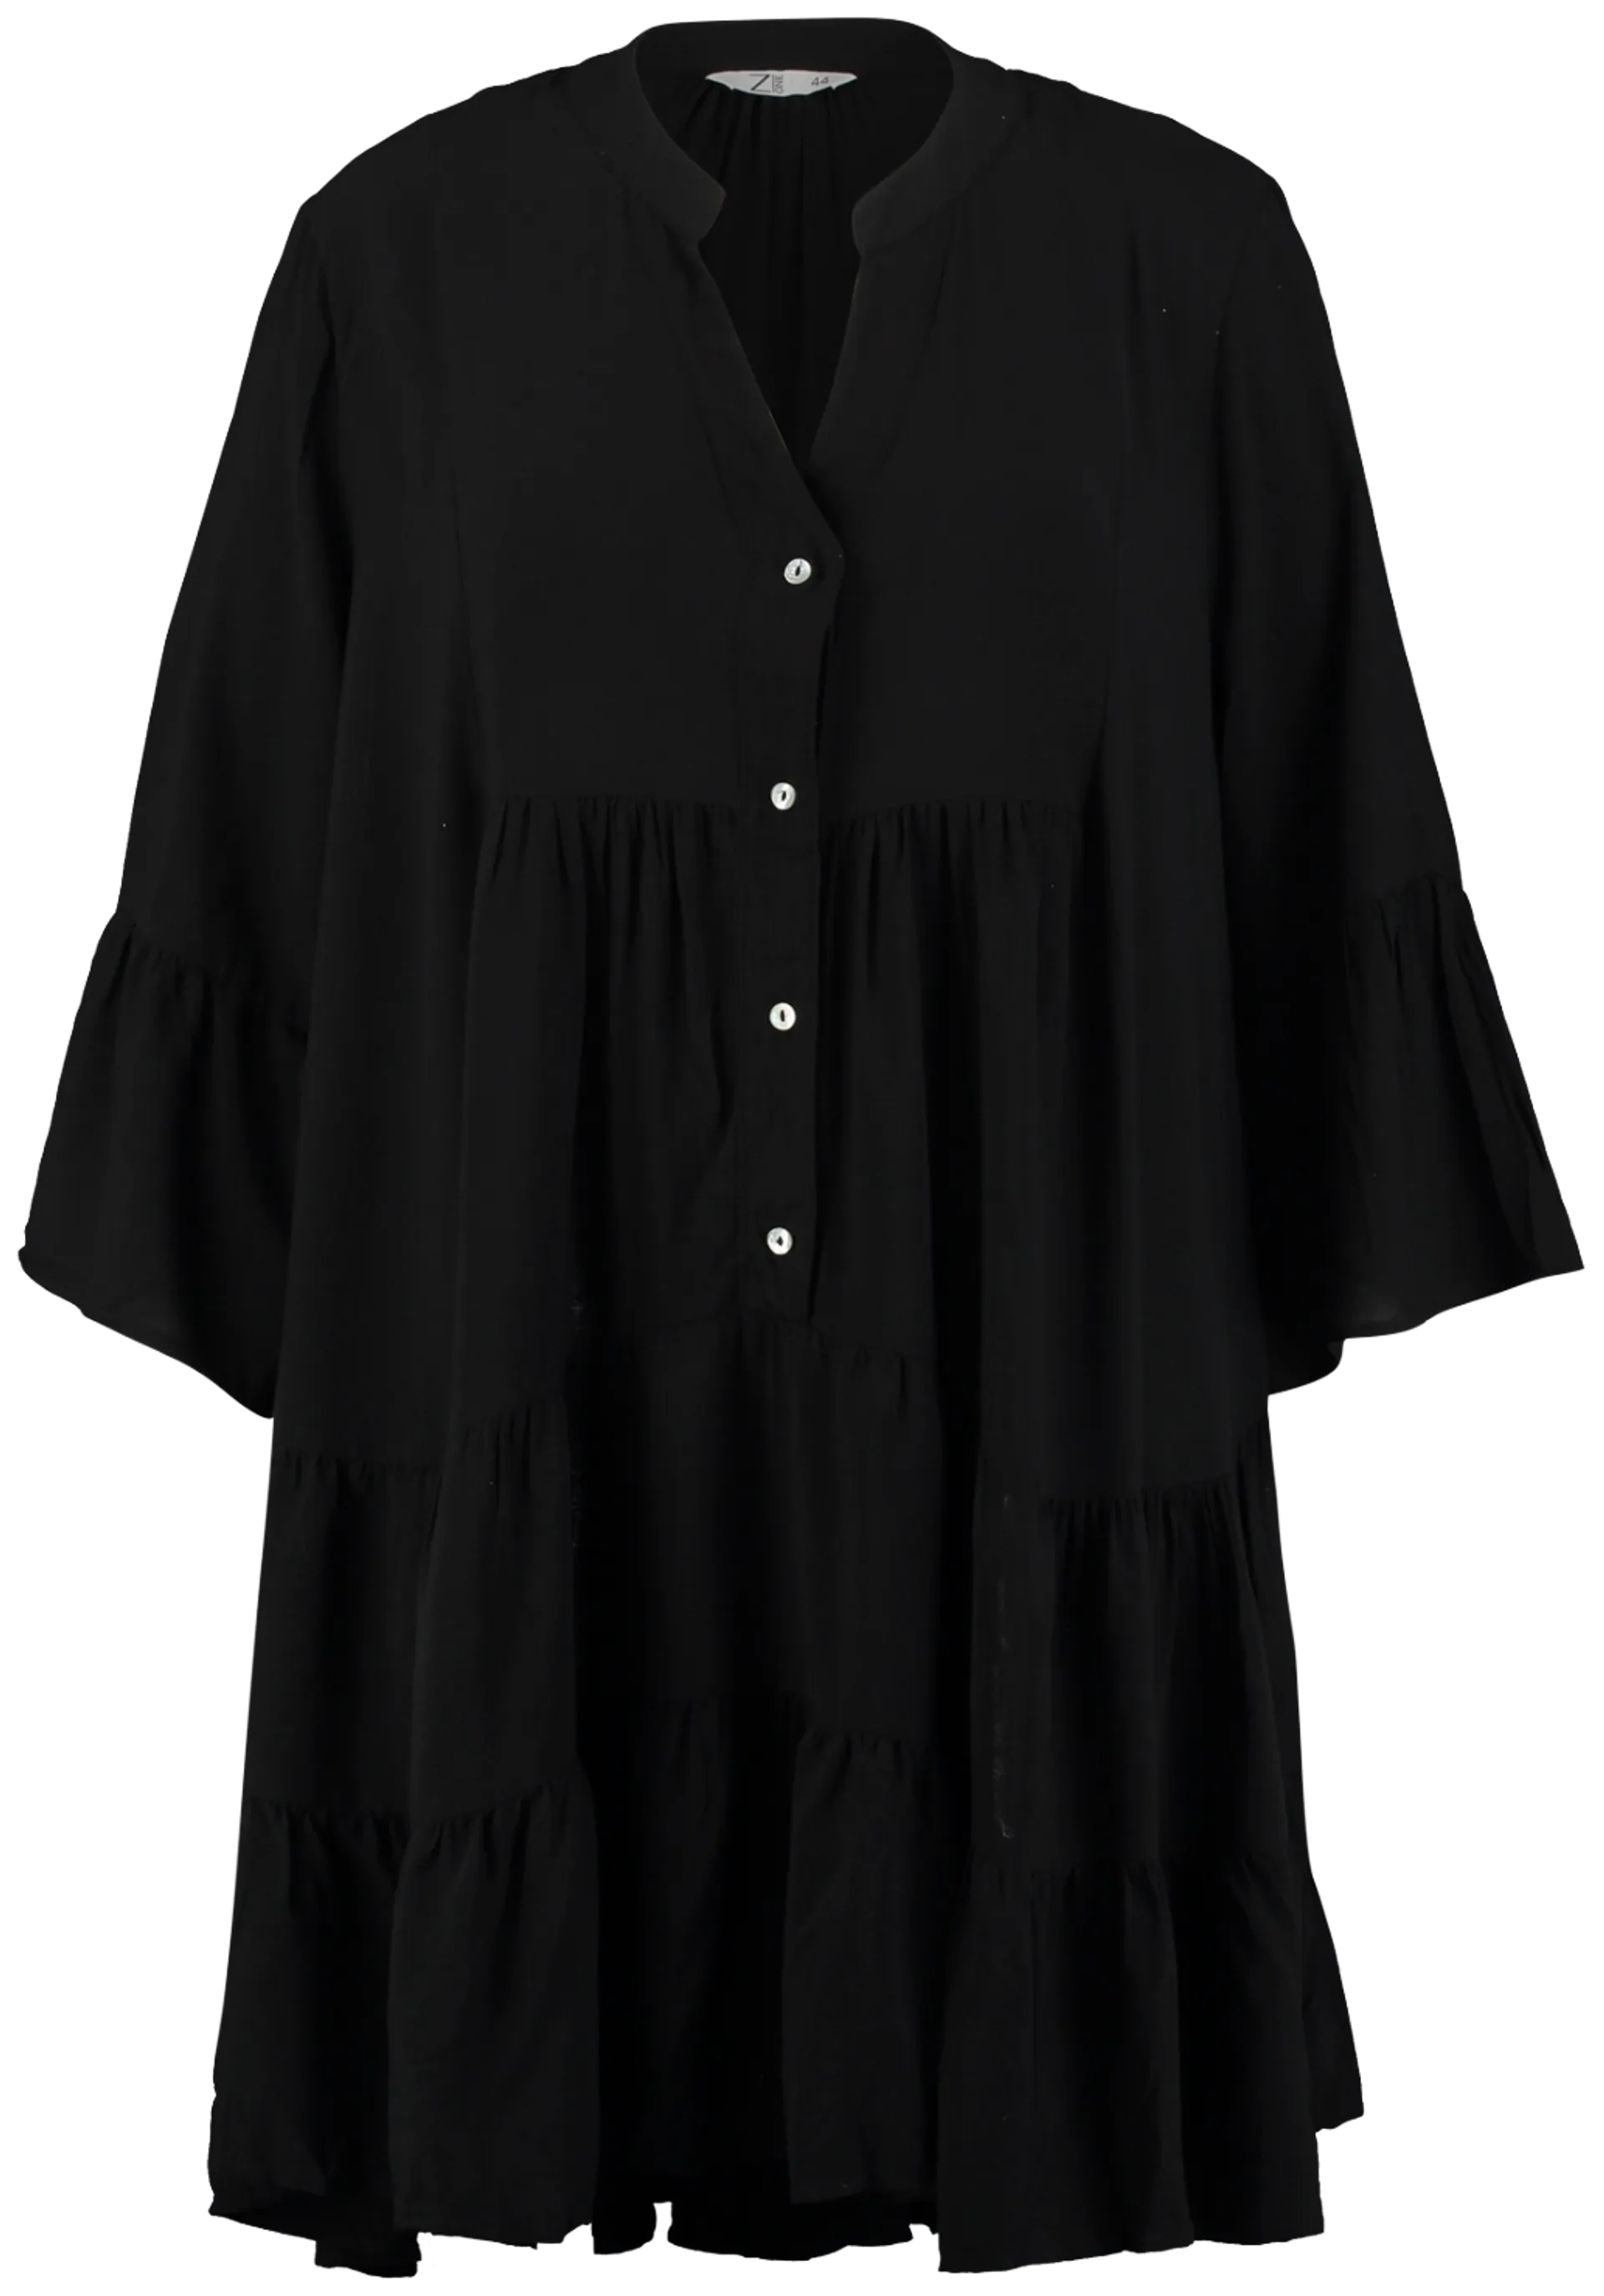 Z-one naisten mekko Lotte MIK-67064-1Z1 - BLACK - 1